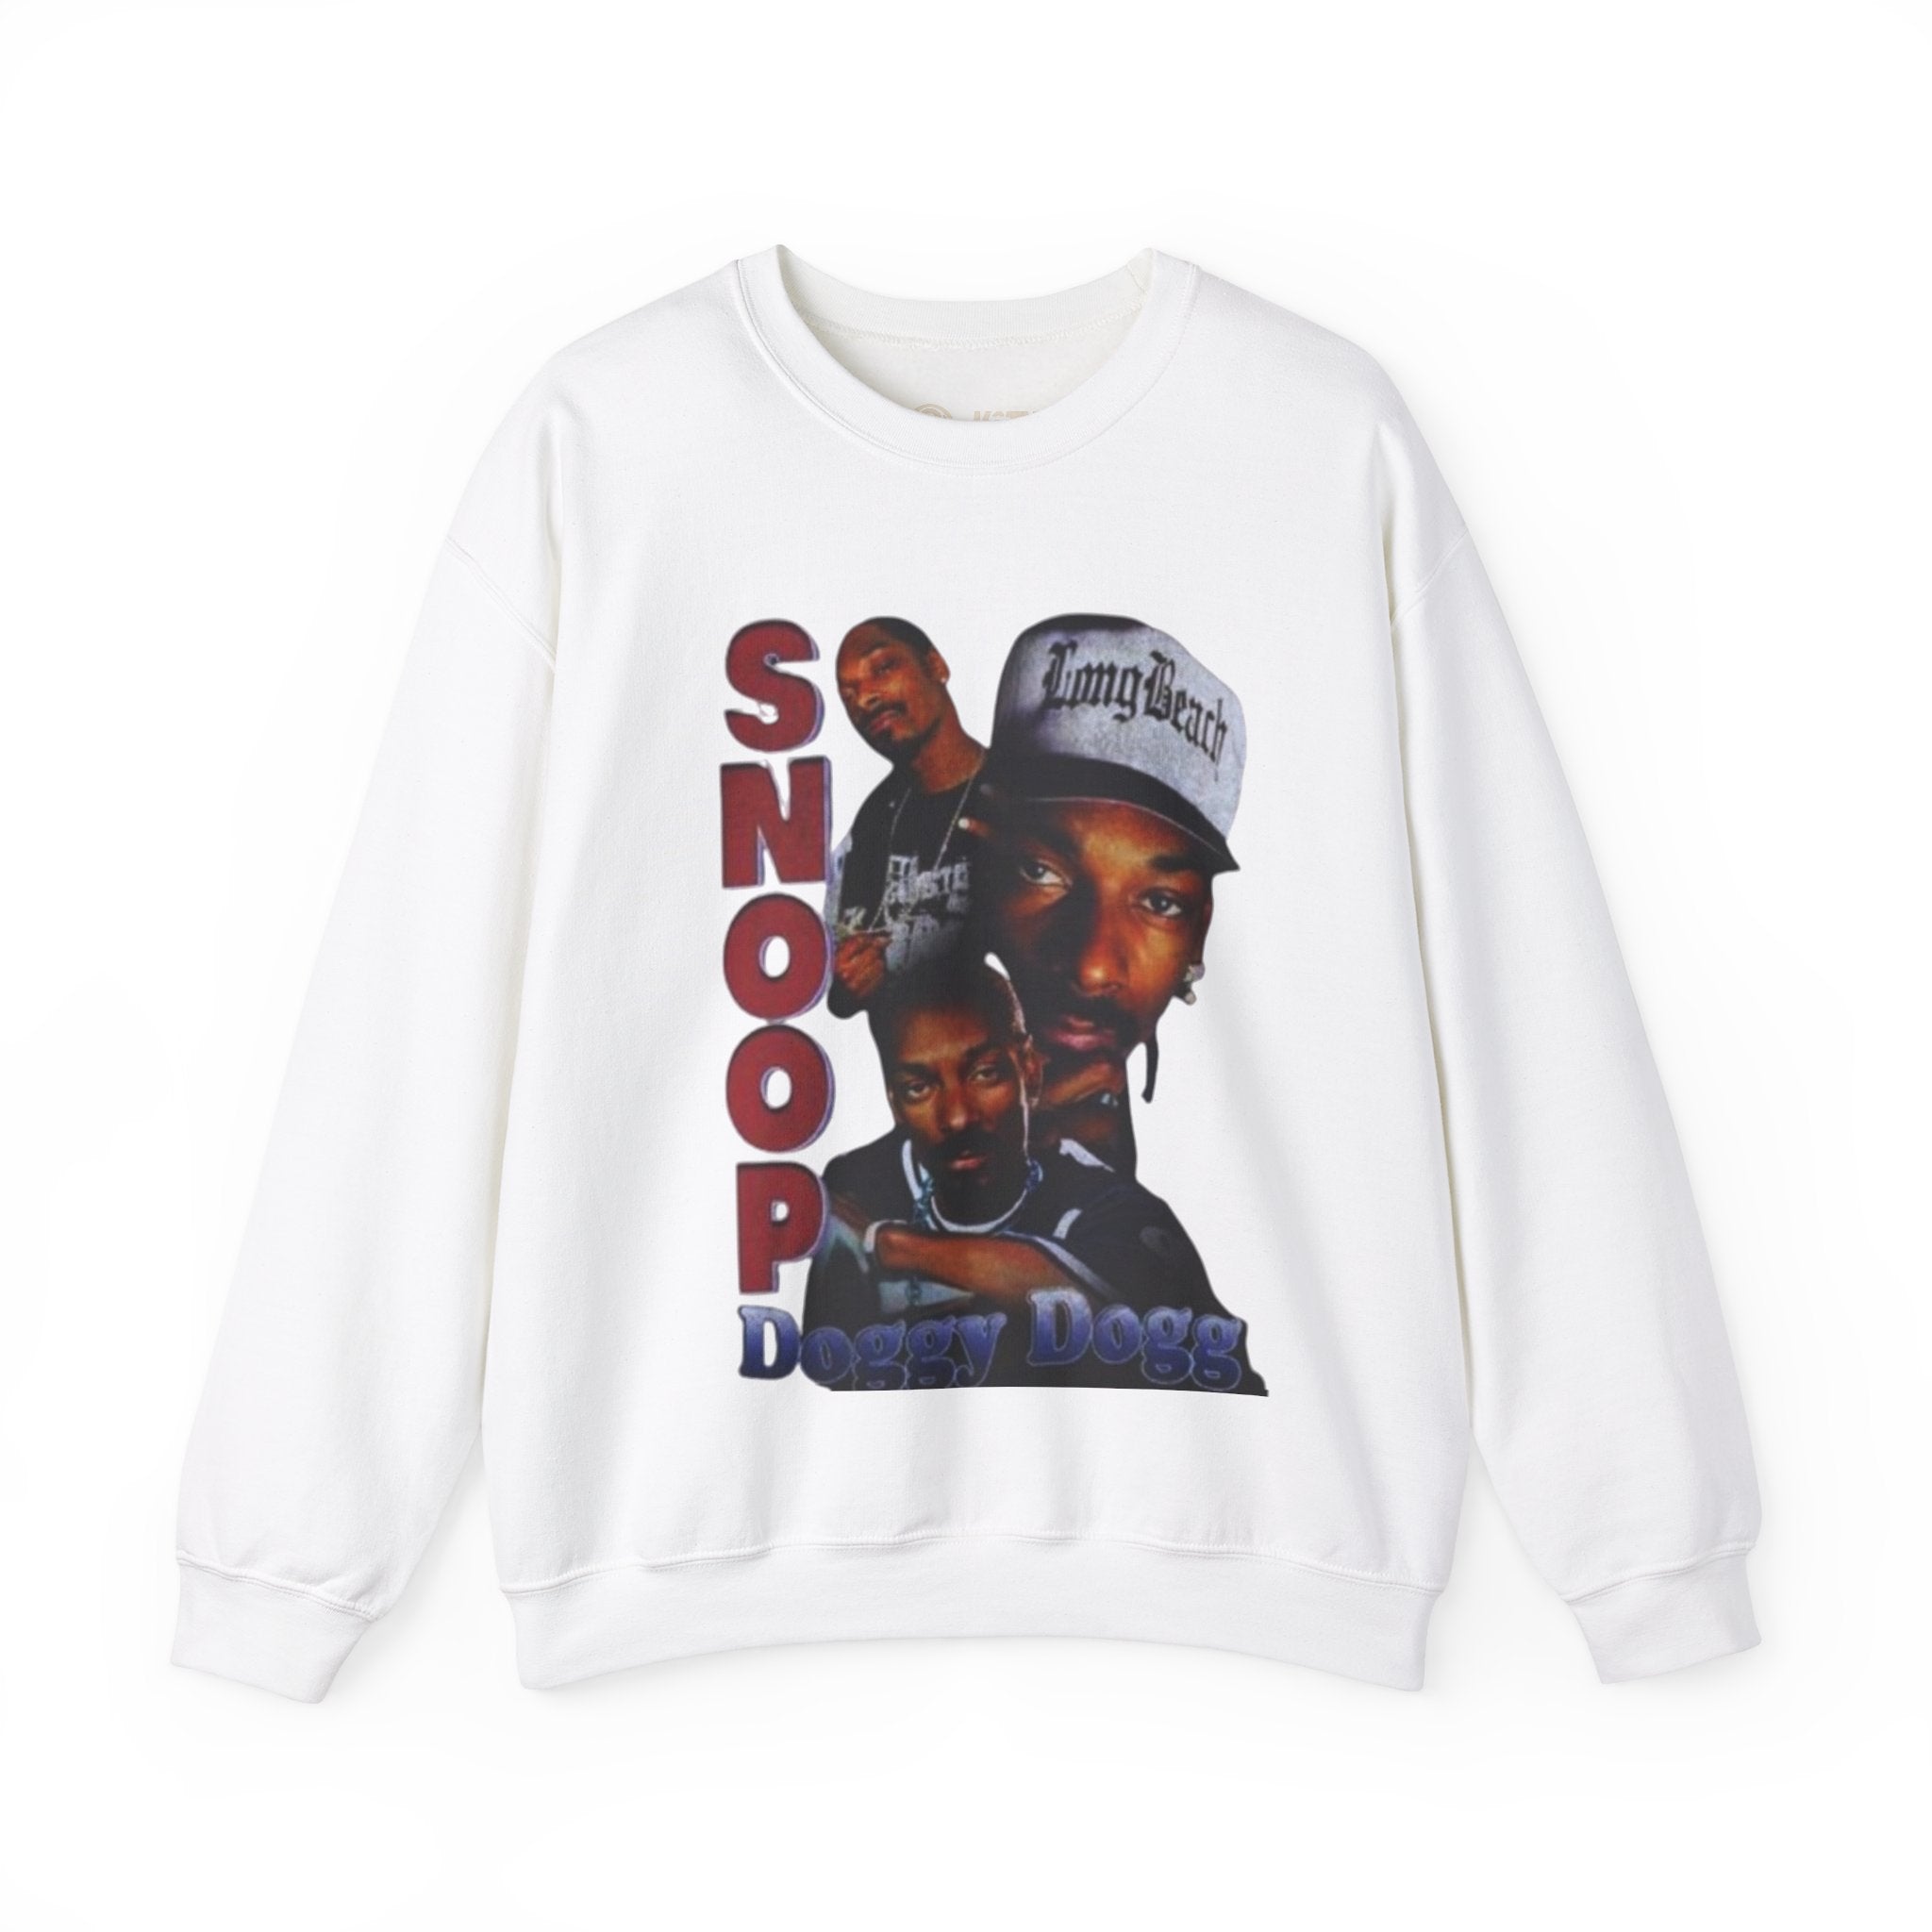 Snoop Dogg "Long Beach" Sweatshirt